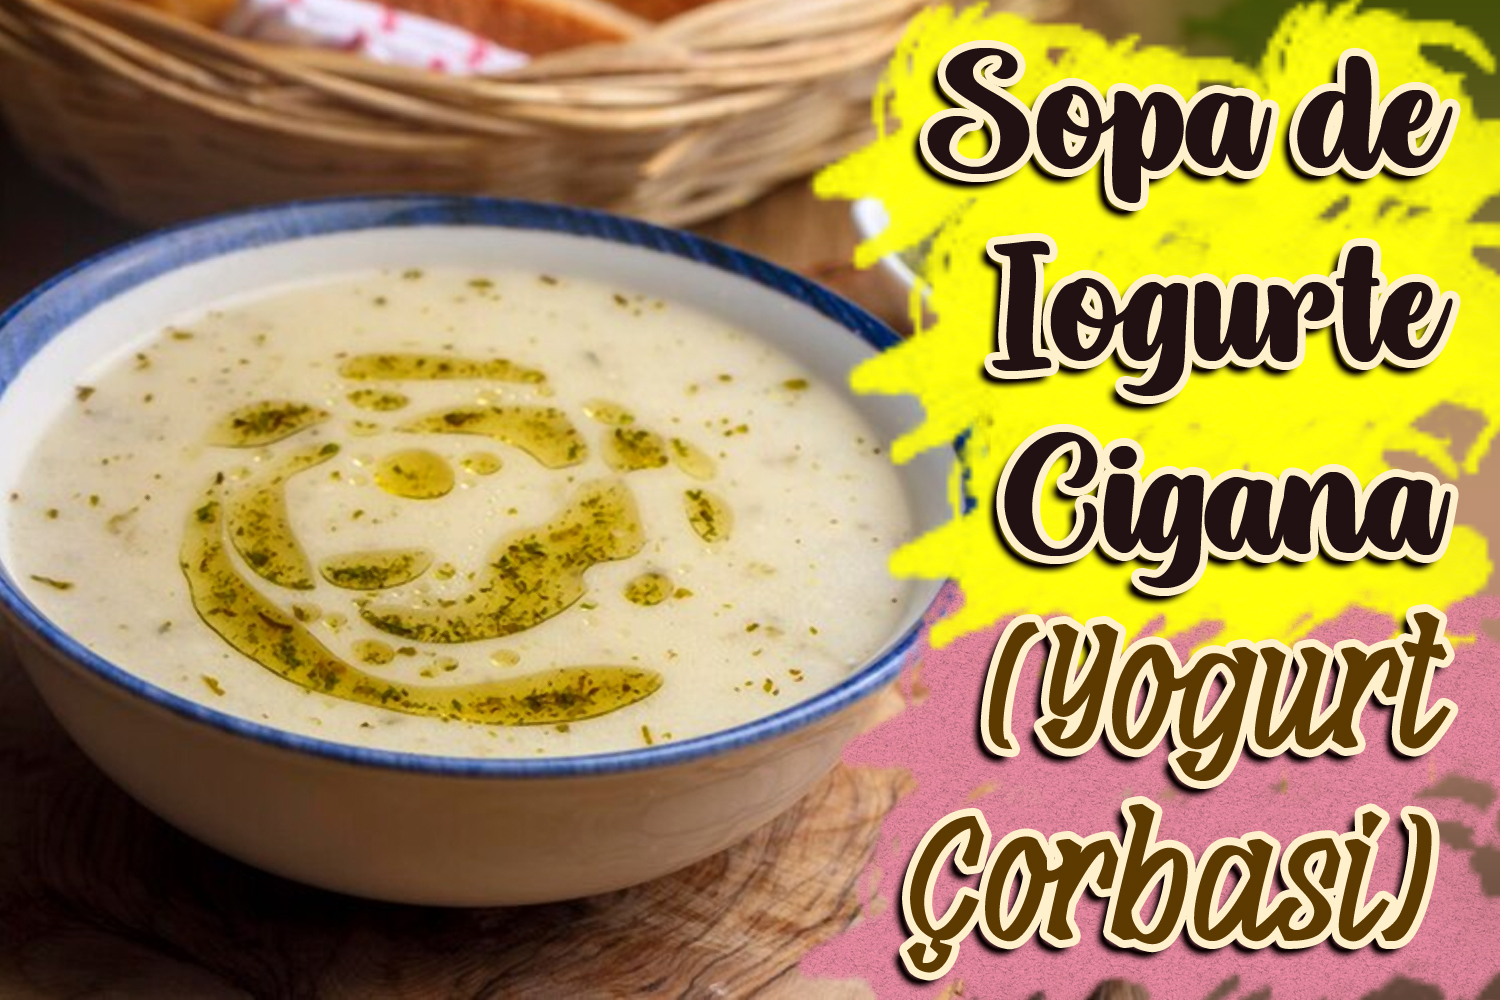 Sopa de Iogurte Cigana (Yogurt Çorbasi)